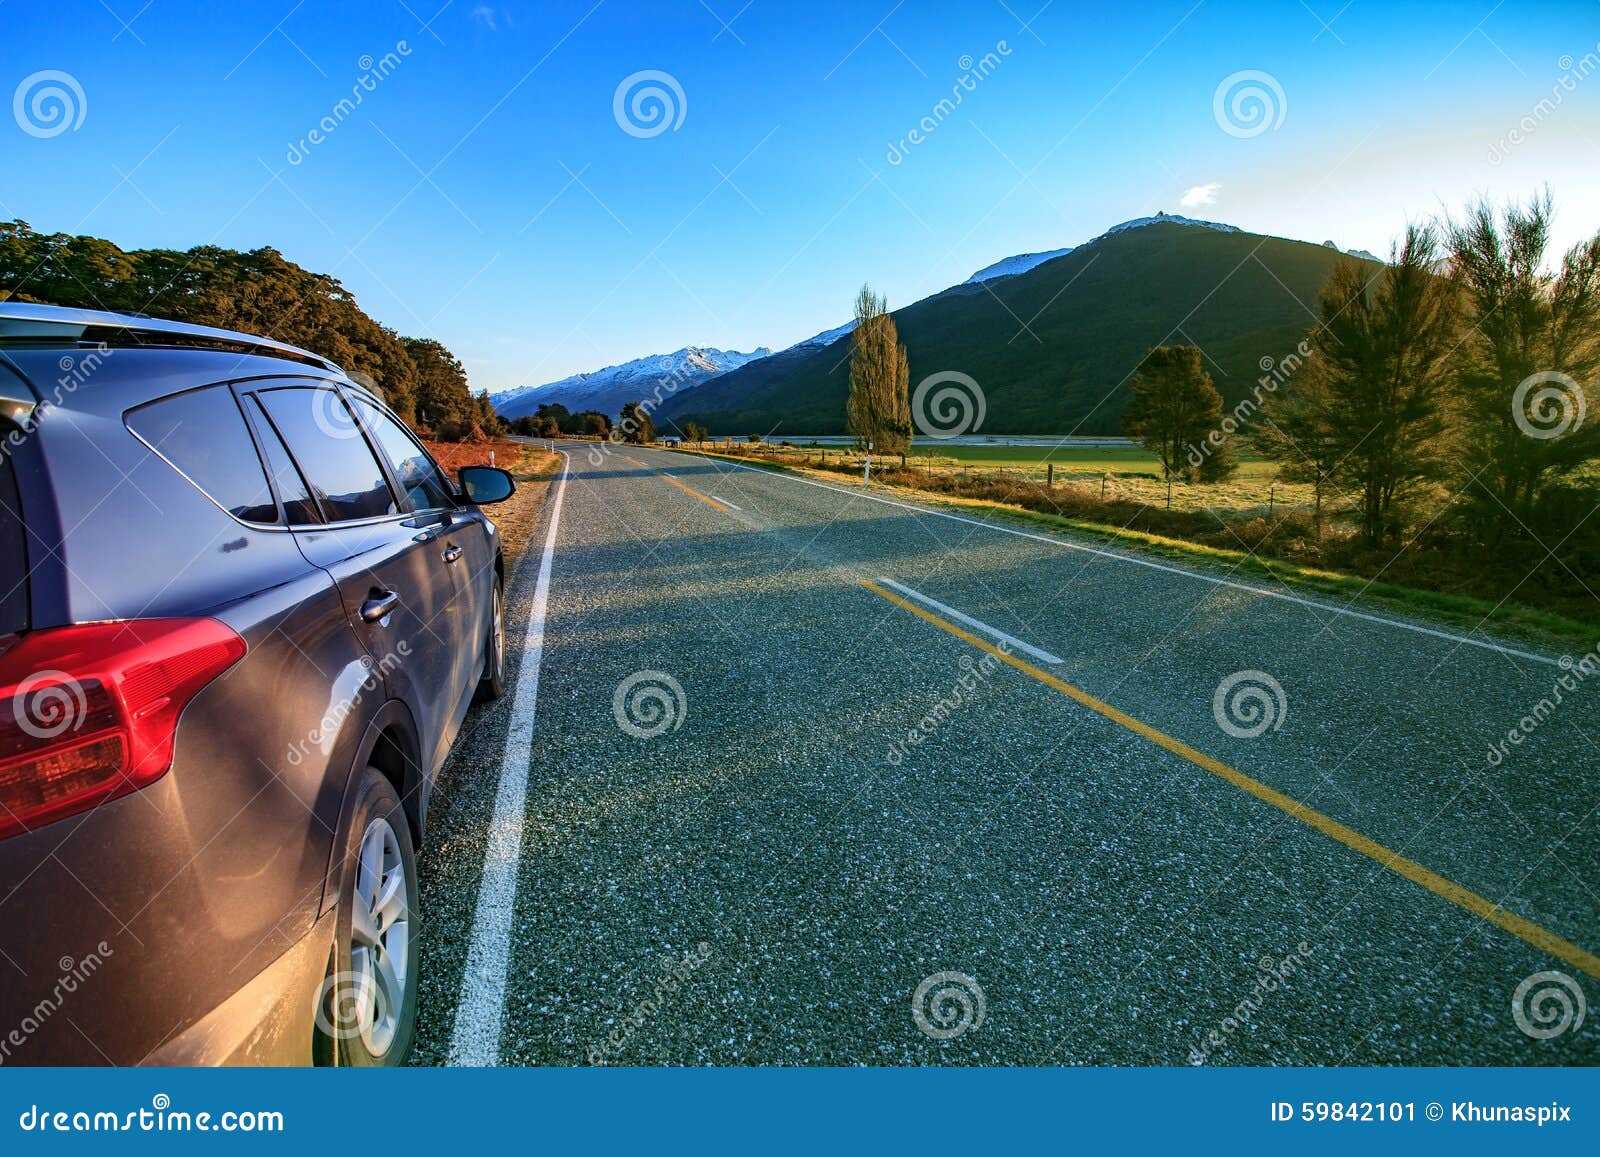 beautiful scenic of asphalt highways of mount aspiring national